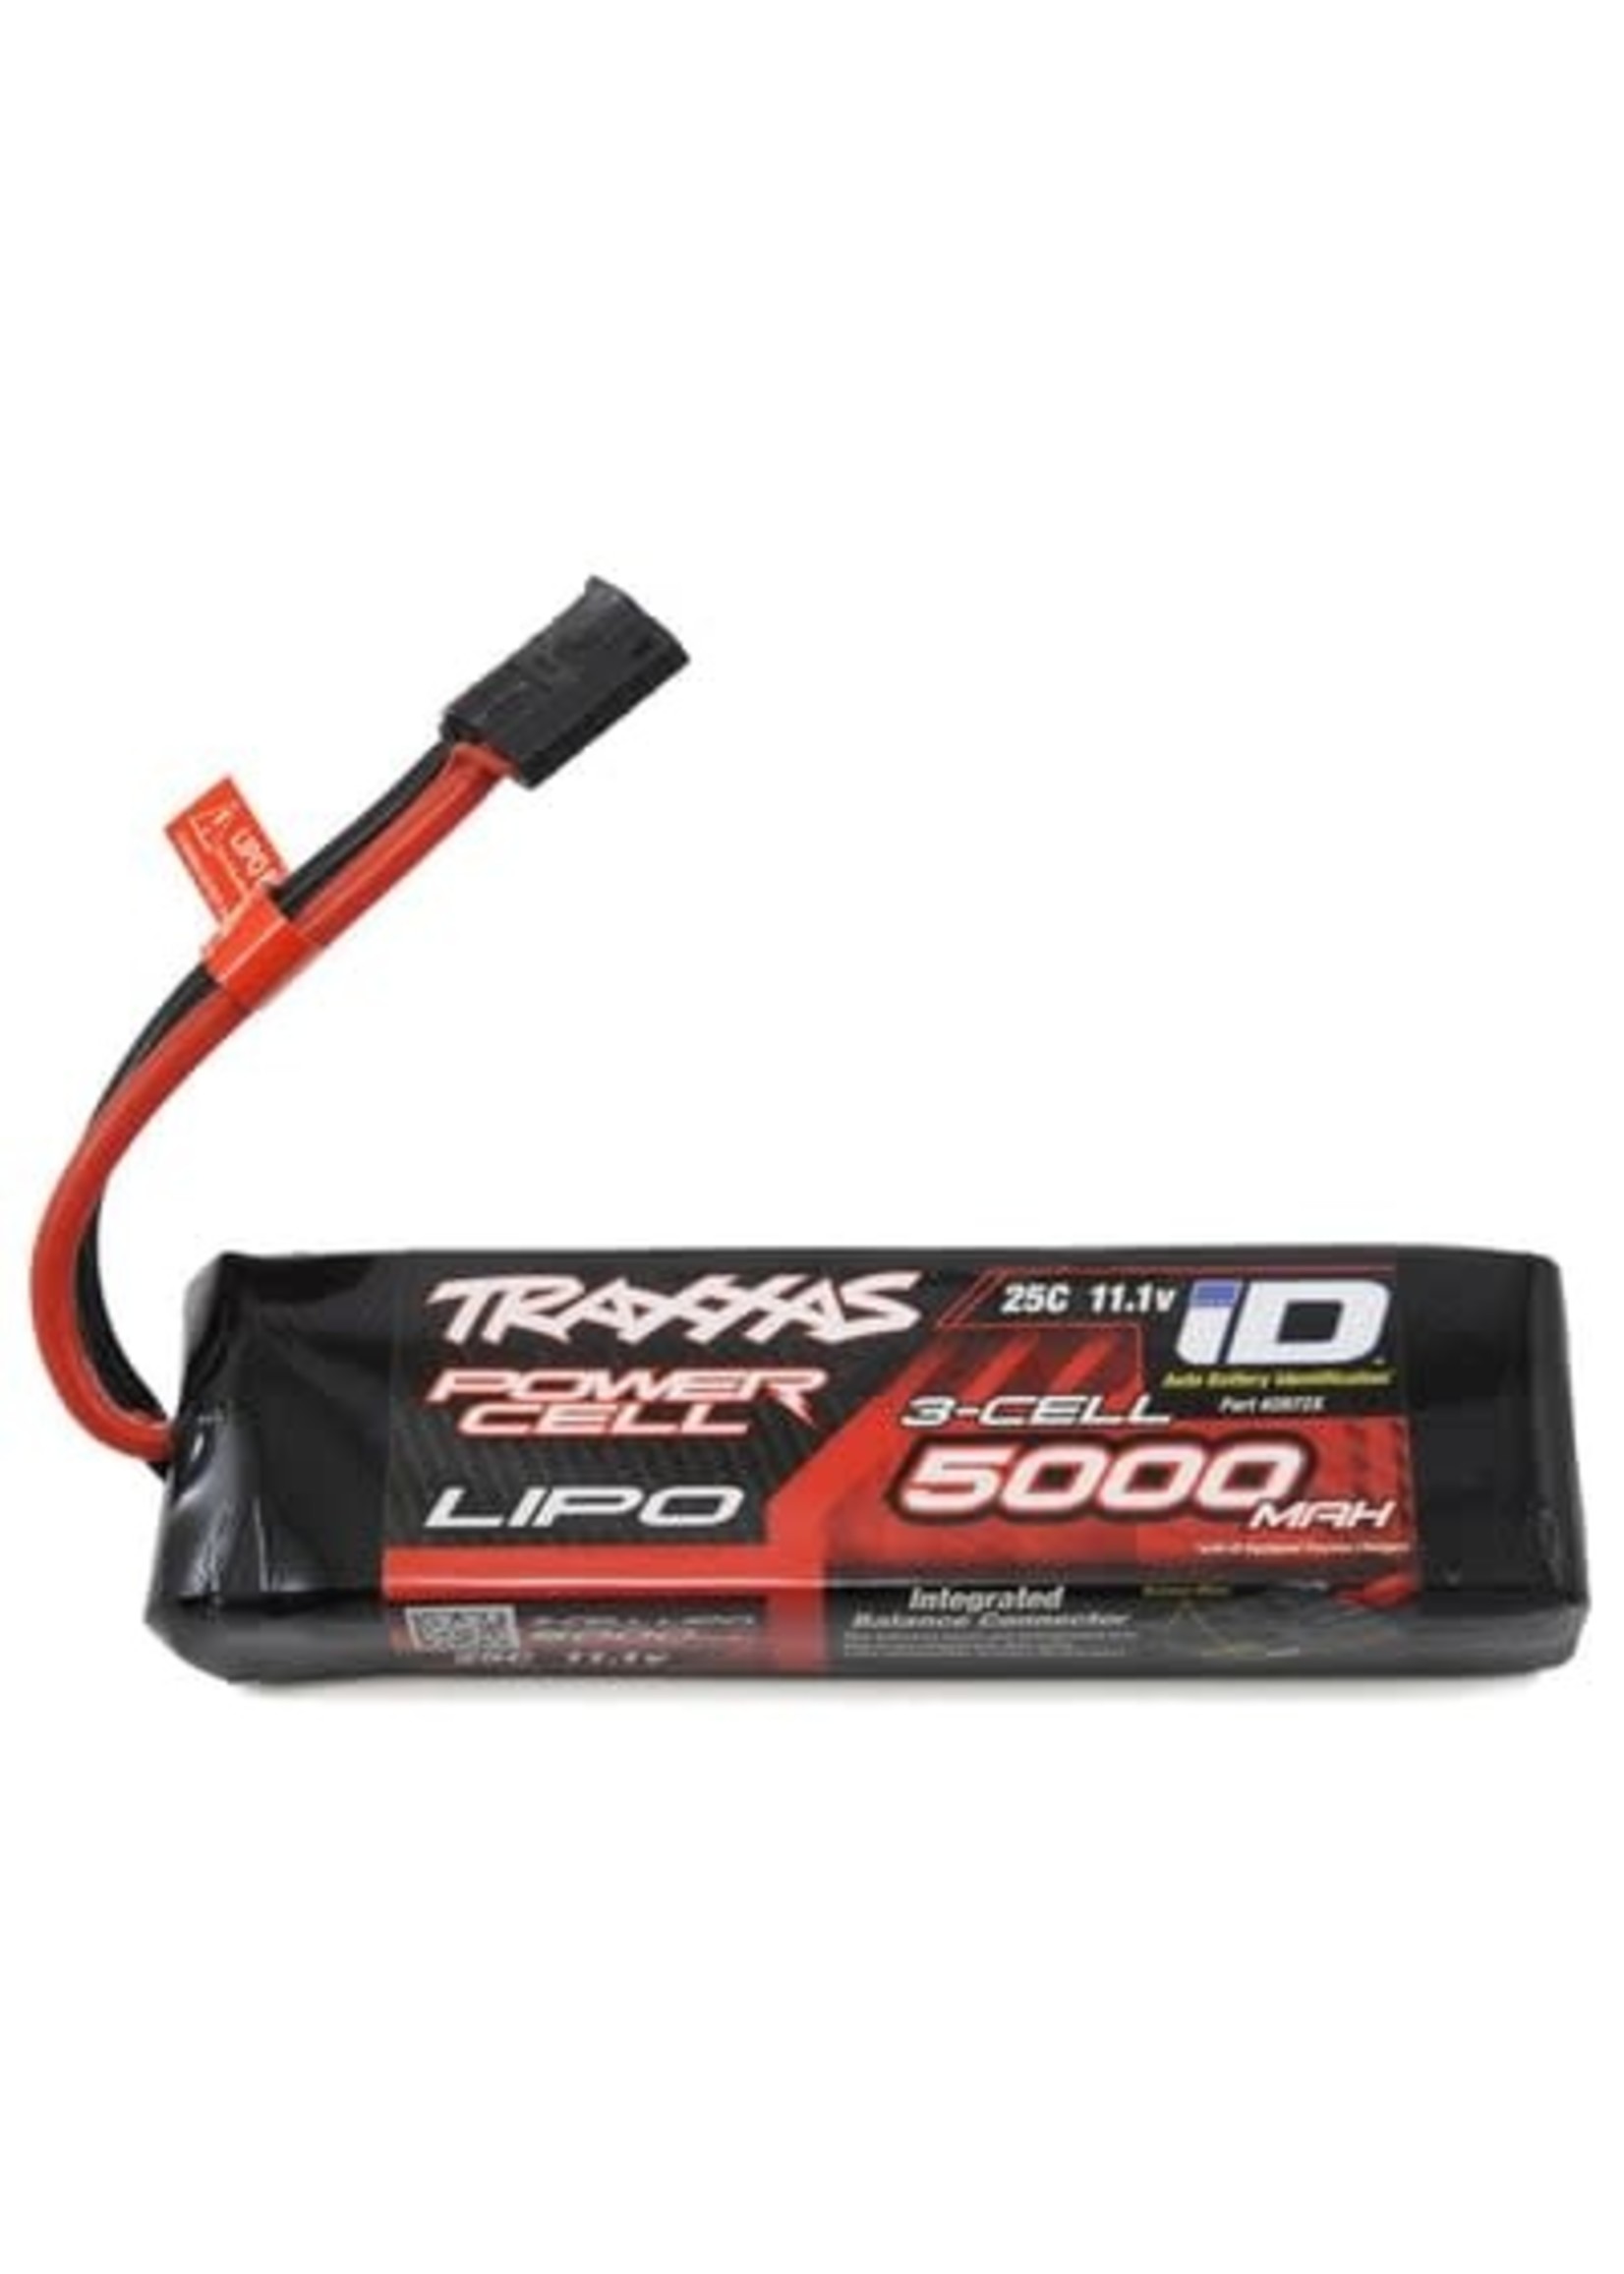 Traxxas 2872X 5000mAh 11.1v 3-Cell 25C LiPo Battery